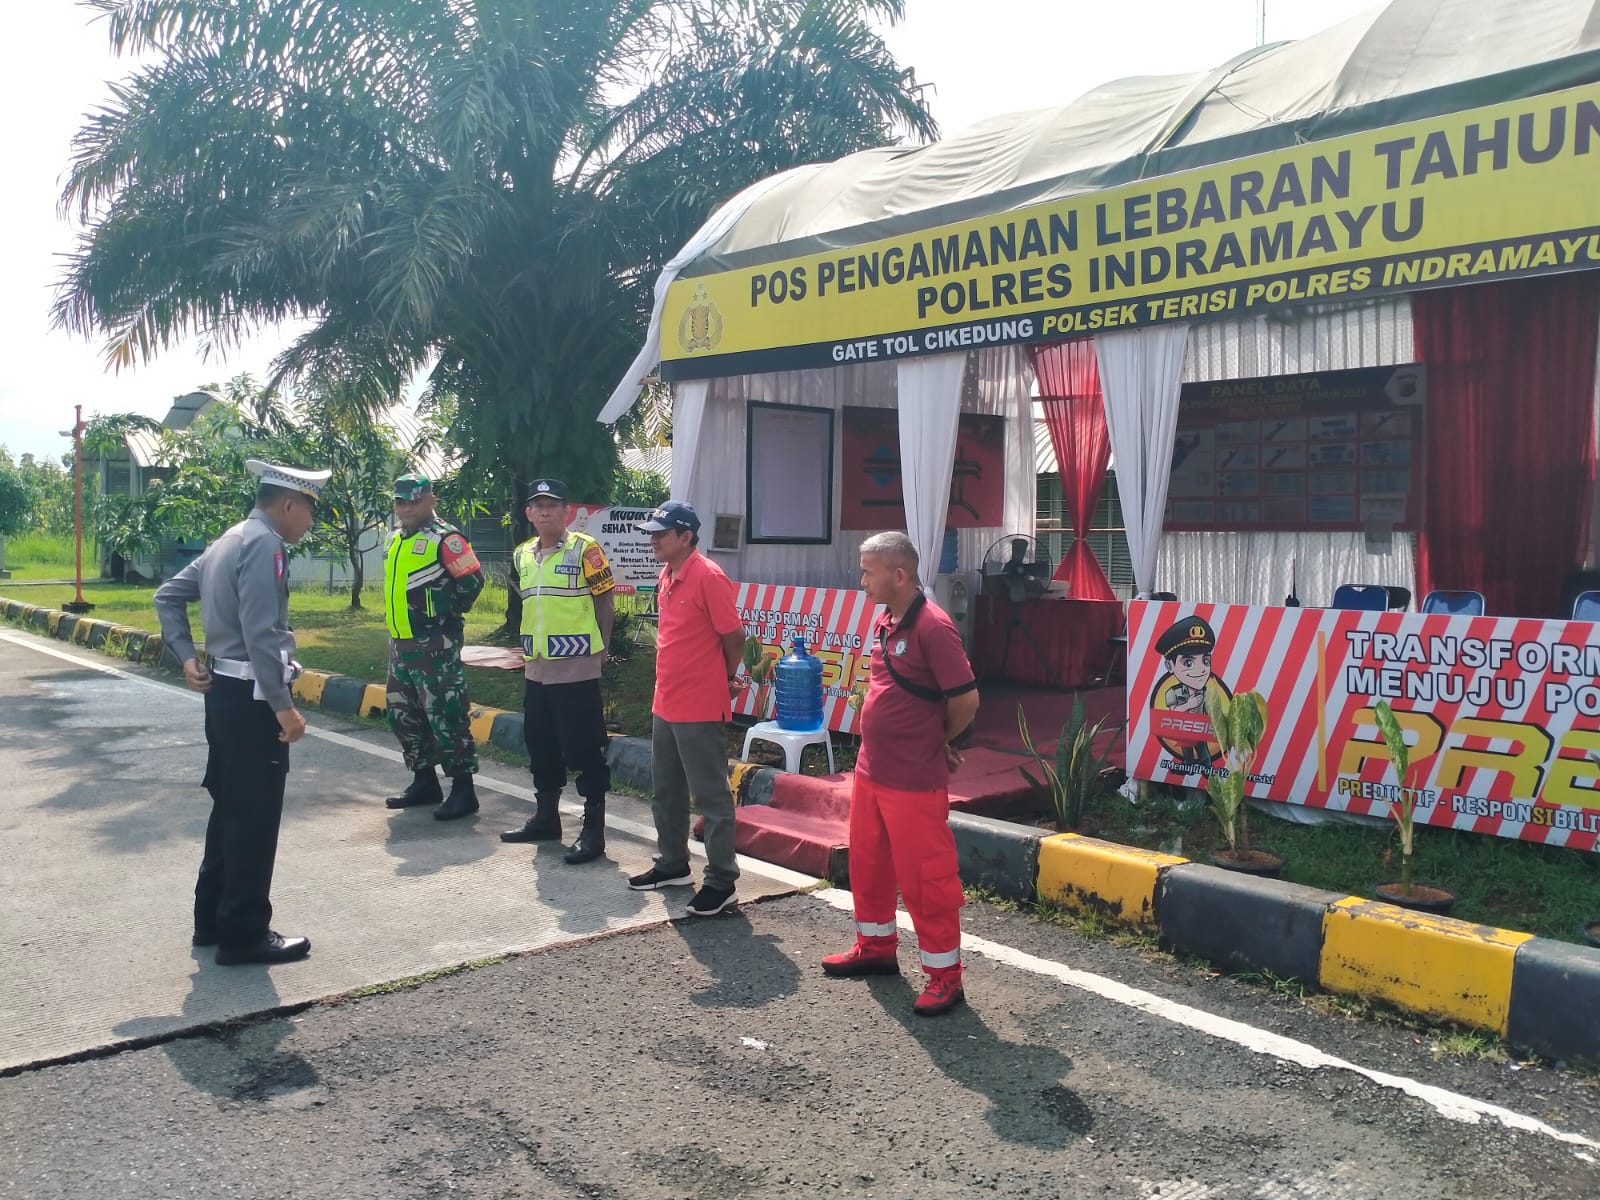 TNI-POLRI Sinergi Melaksanakan Pengamanan di Pos Pam Gate Tol Cikedung